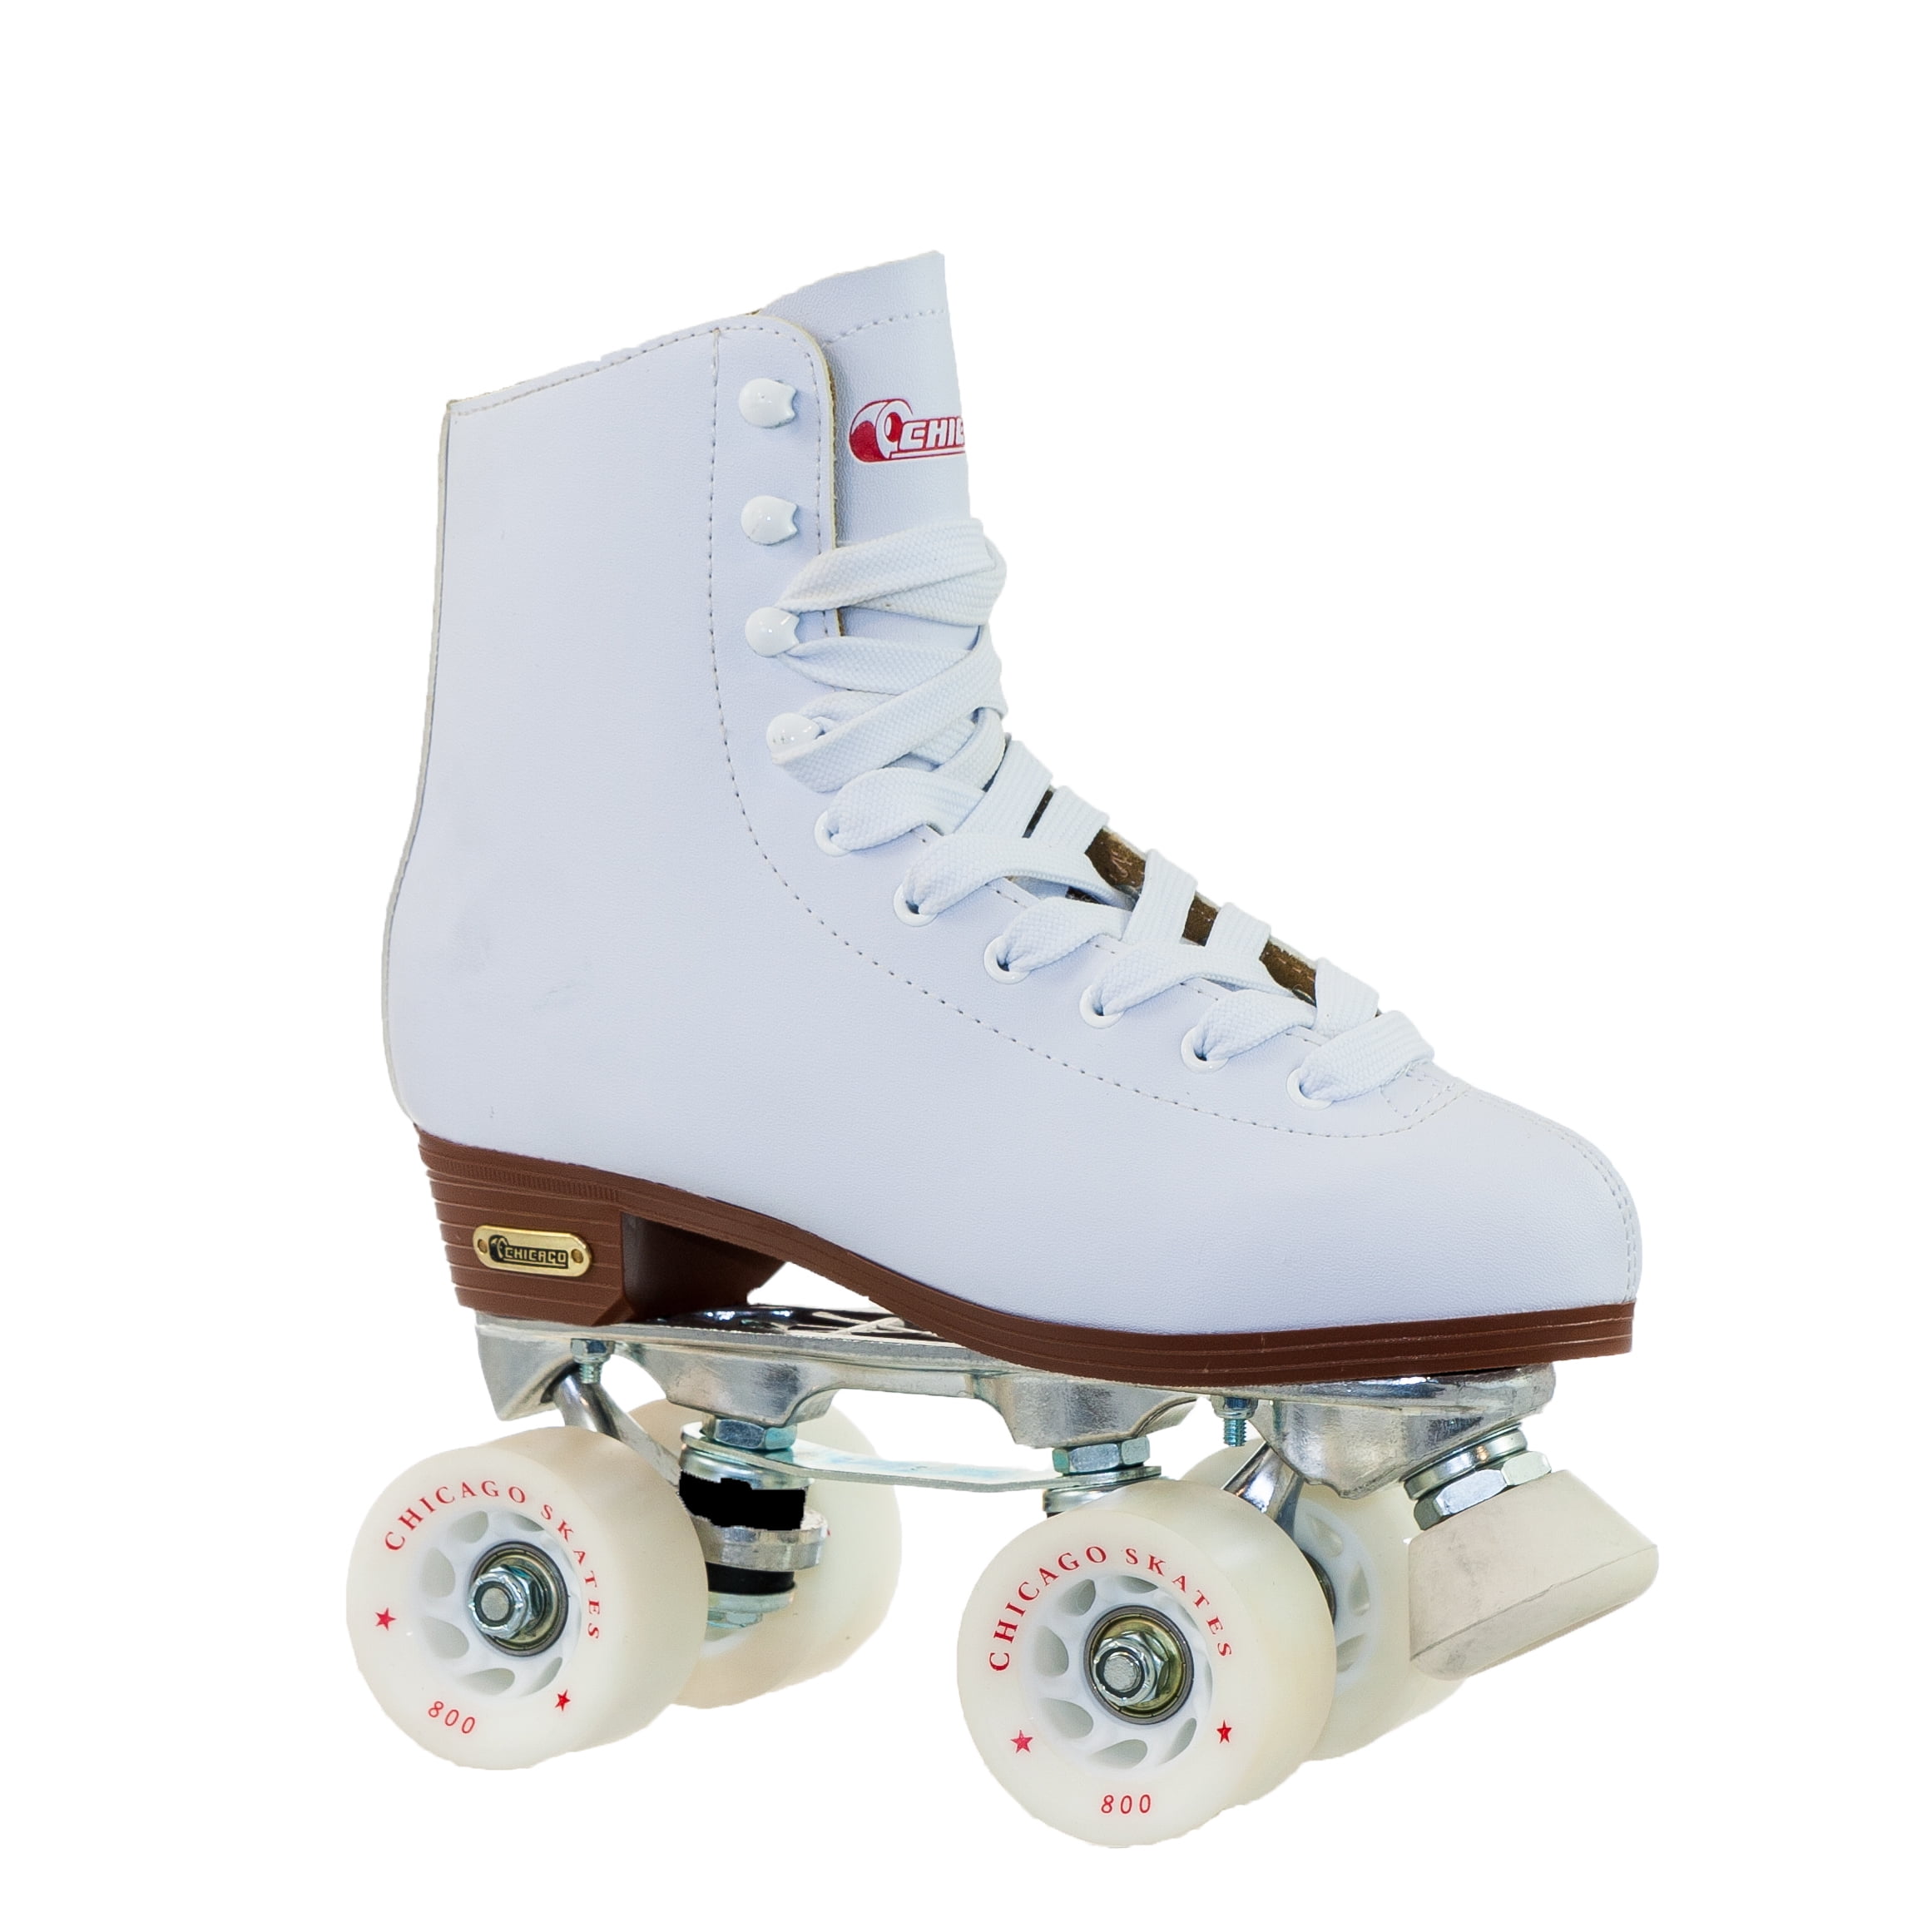 White Chicago Ladies Classic Quad Roller Skates US 8 for sale online 